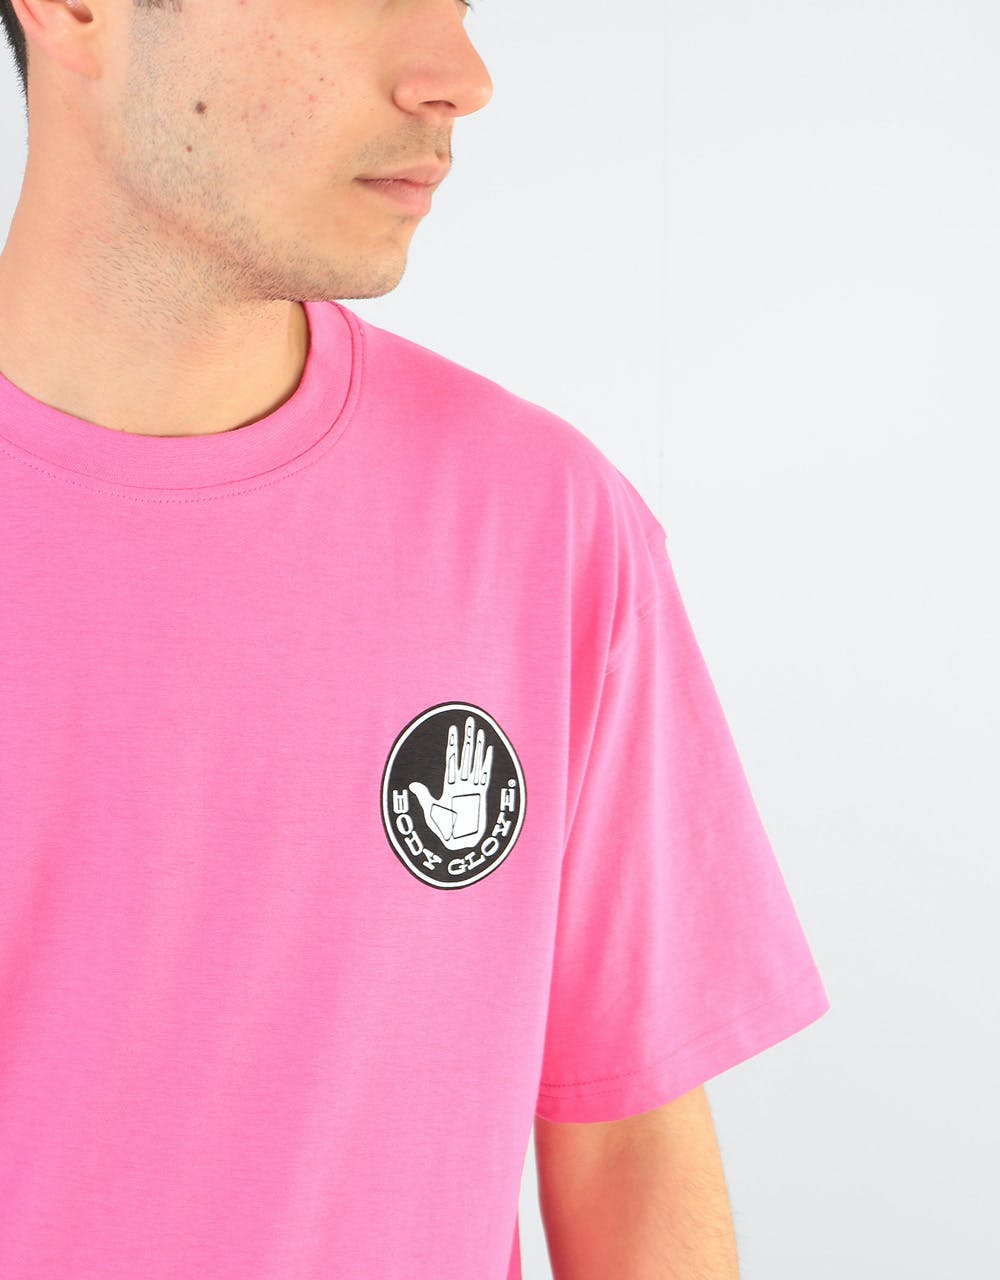 Body Glove Core Logo T-Shirt - Pink